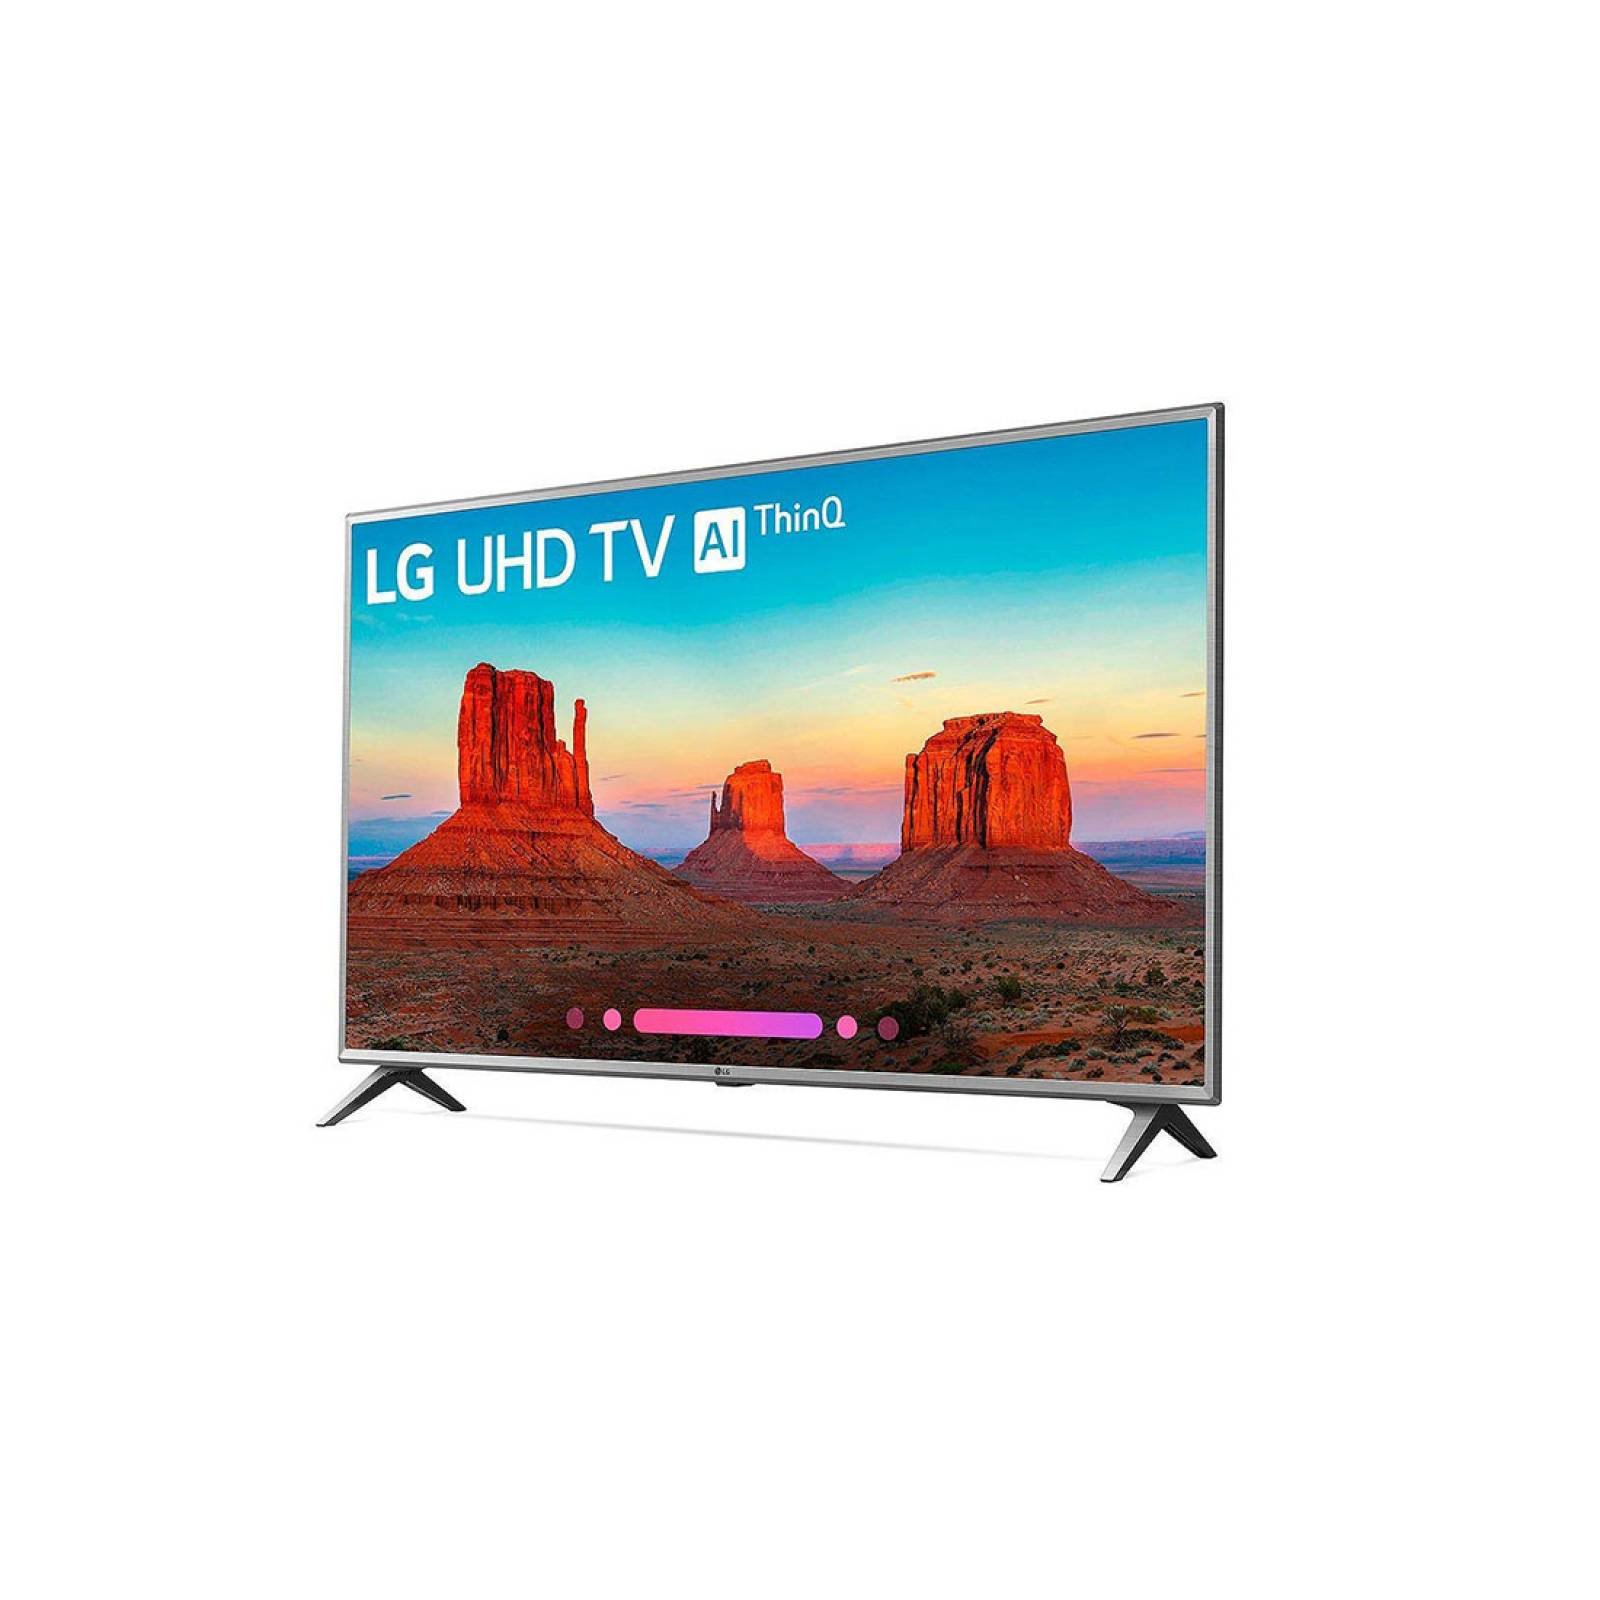 LG Smart Tv LED HDR FullHD 120Hz  Reacondicionado